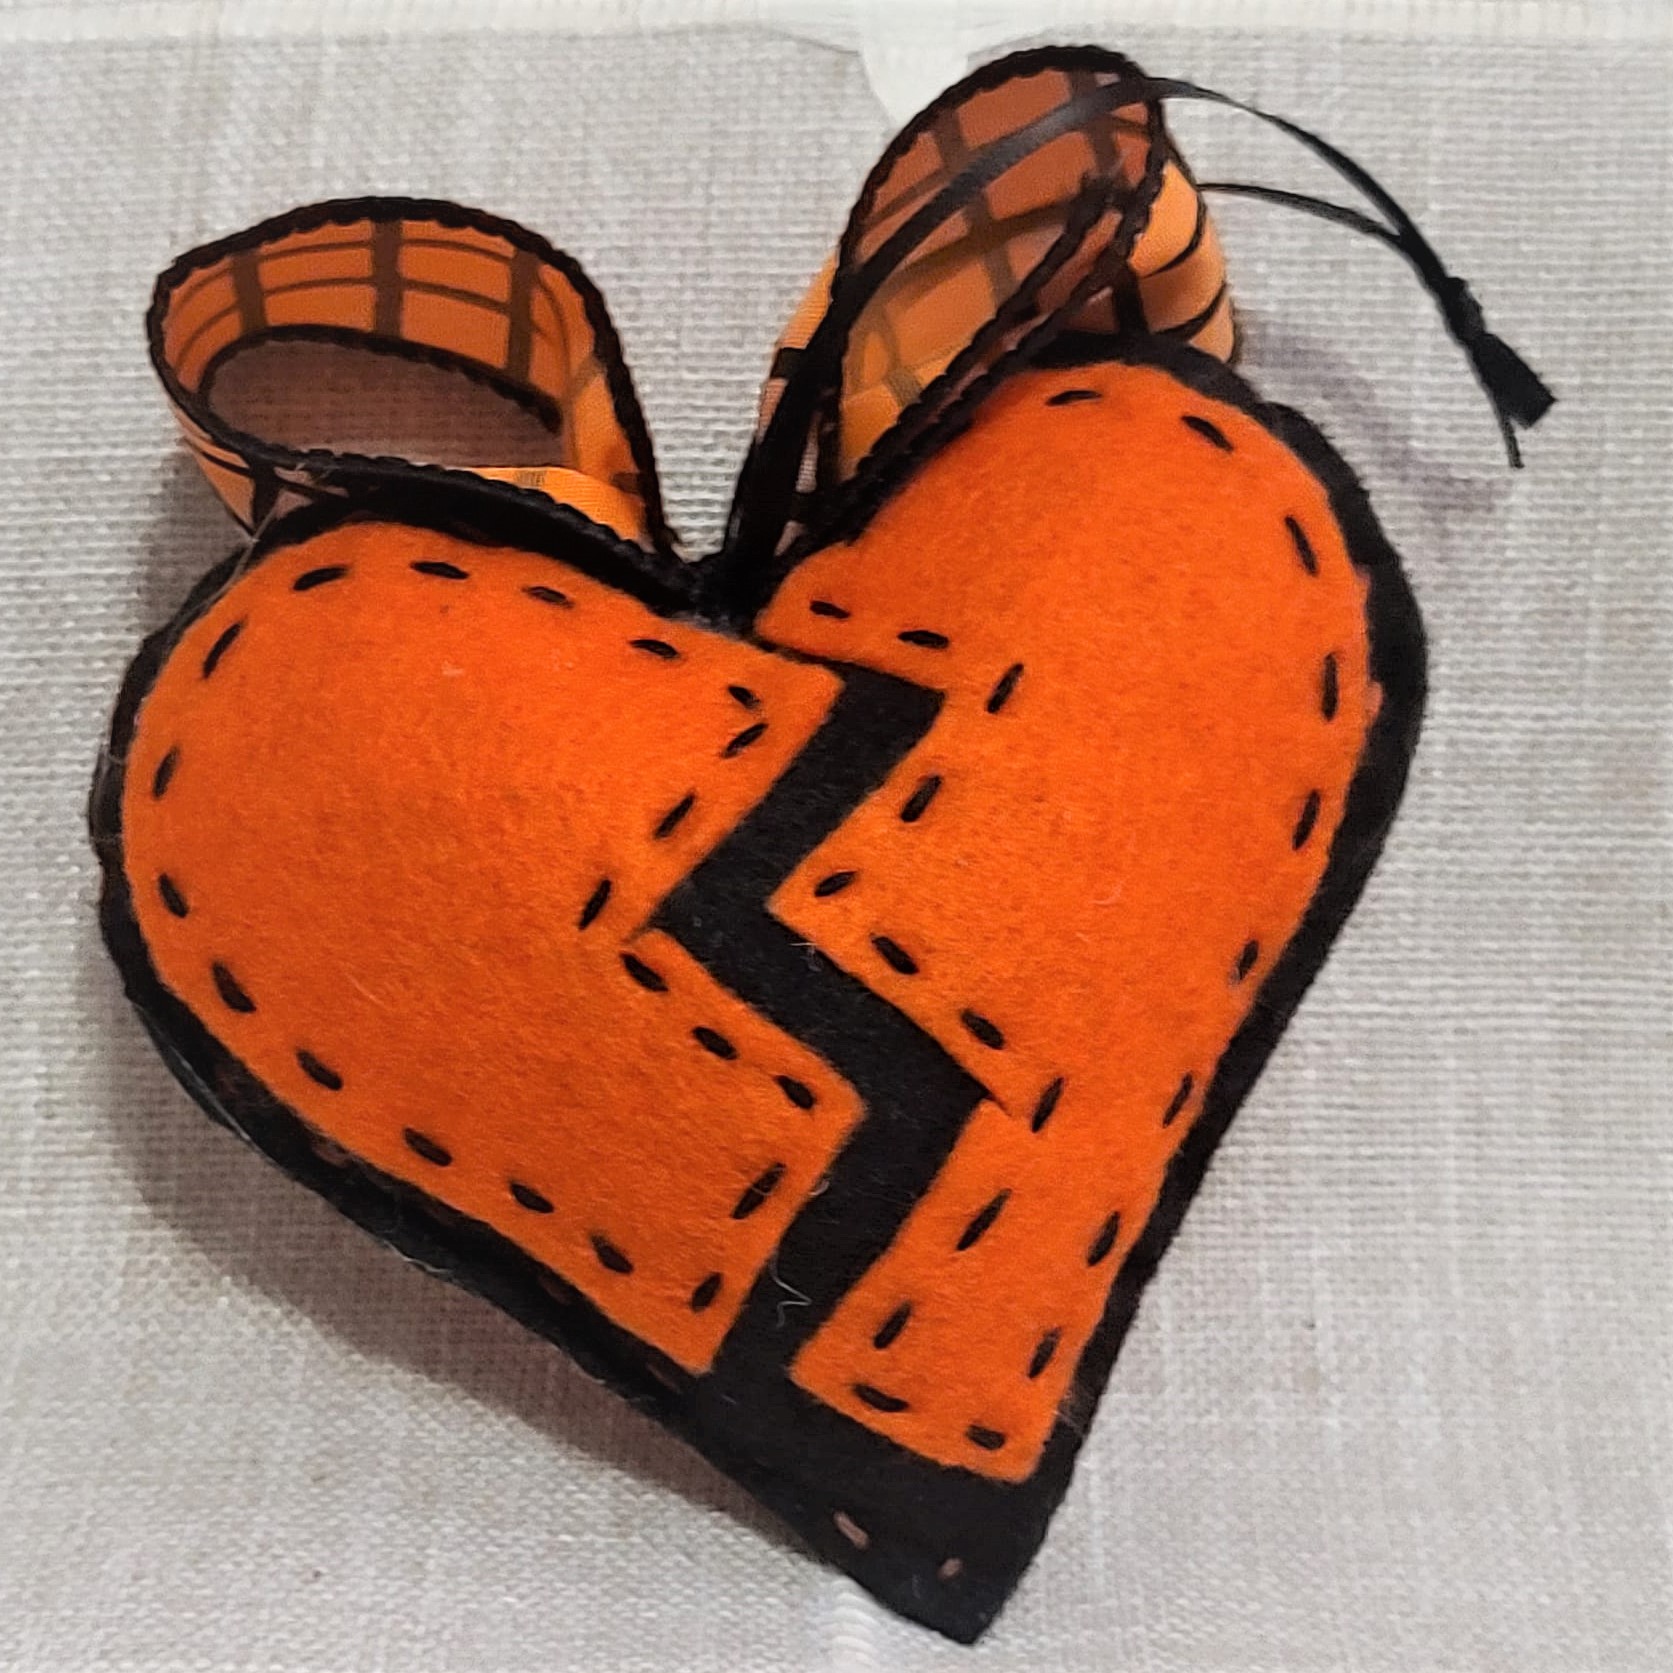 Halloween felt broken heart ornament 2 sided orange and black